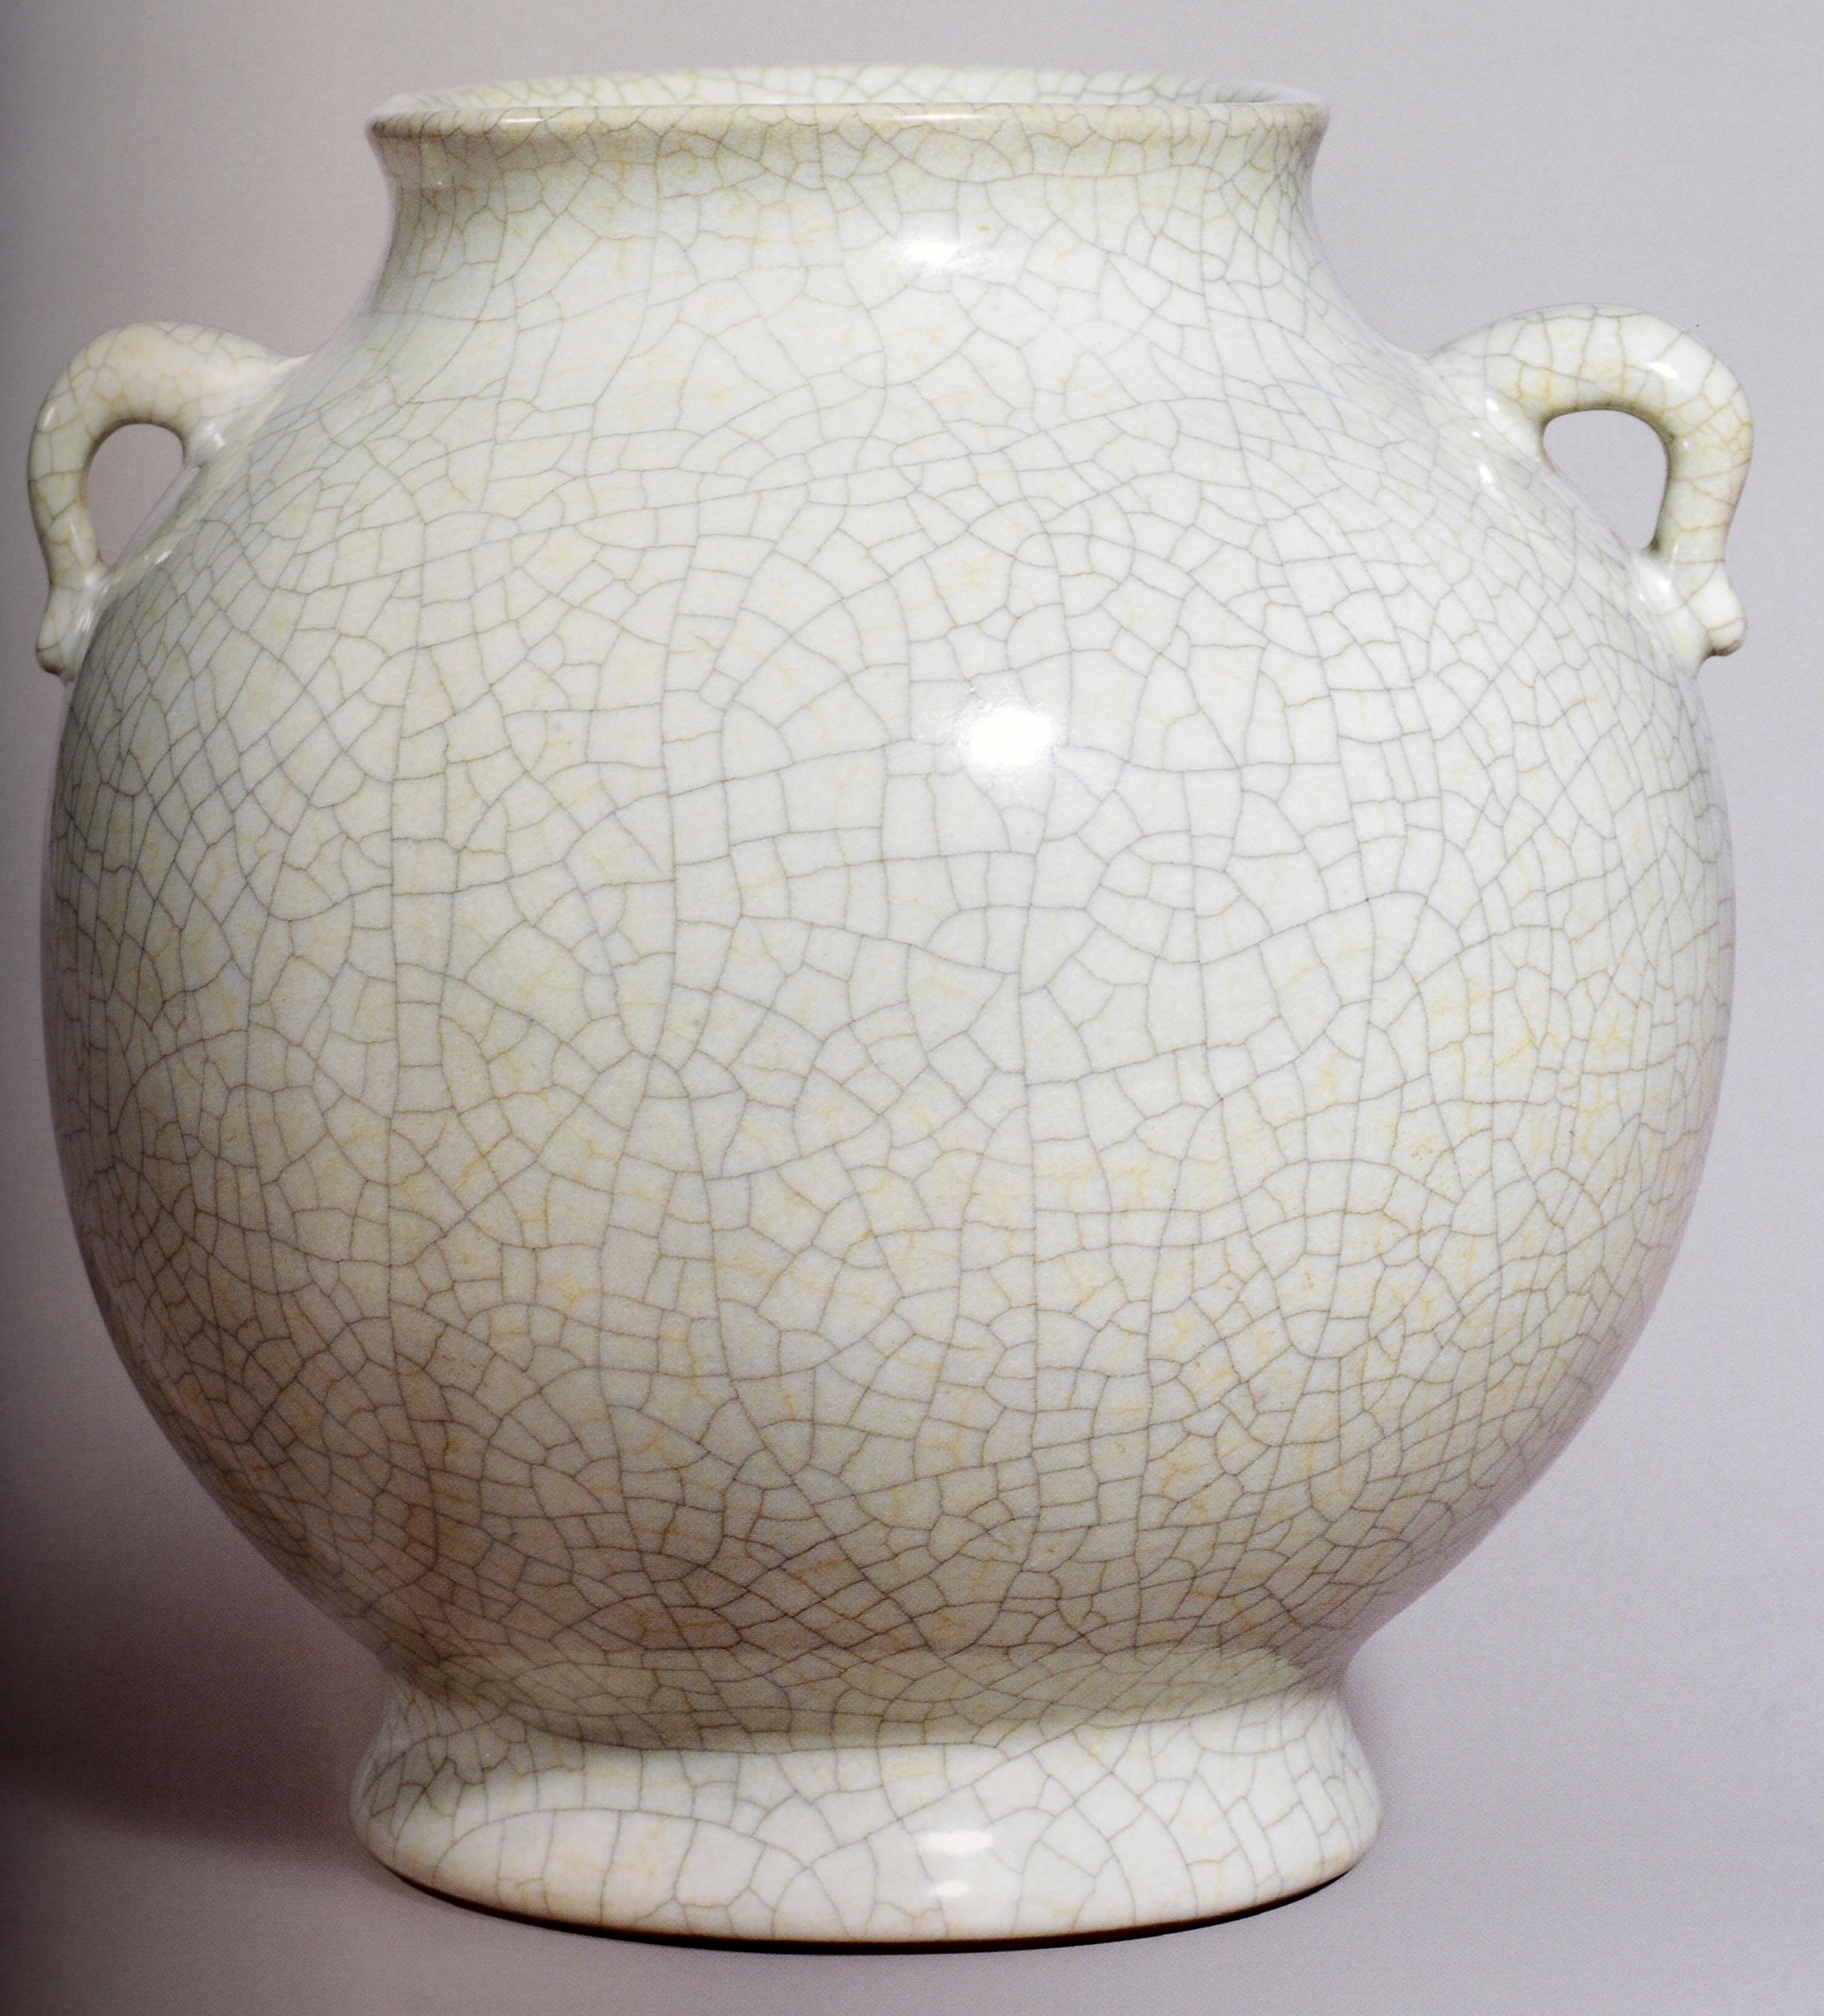 Paper Sotheby's London 2019 Auction Catalog Qing Imperial Porcelain, 1st Ed For Sale